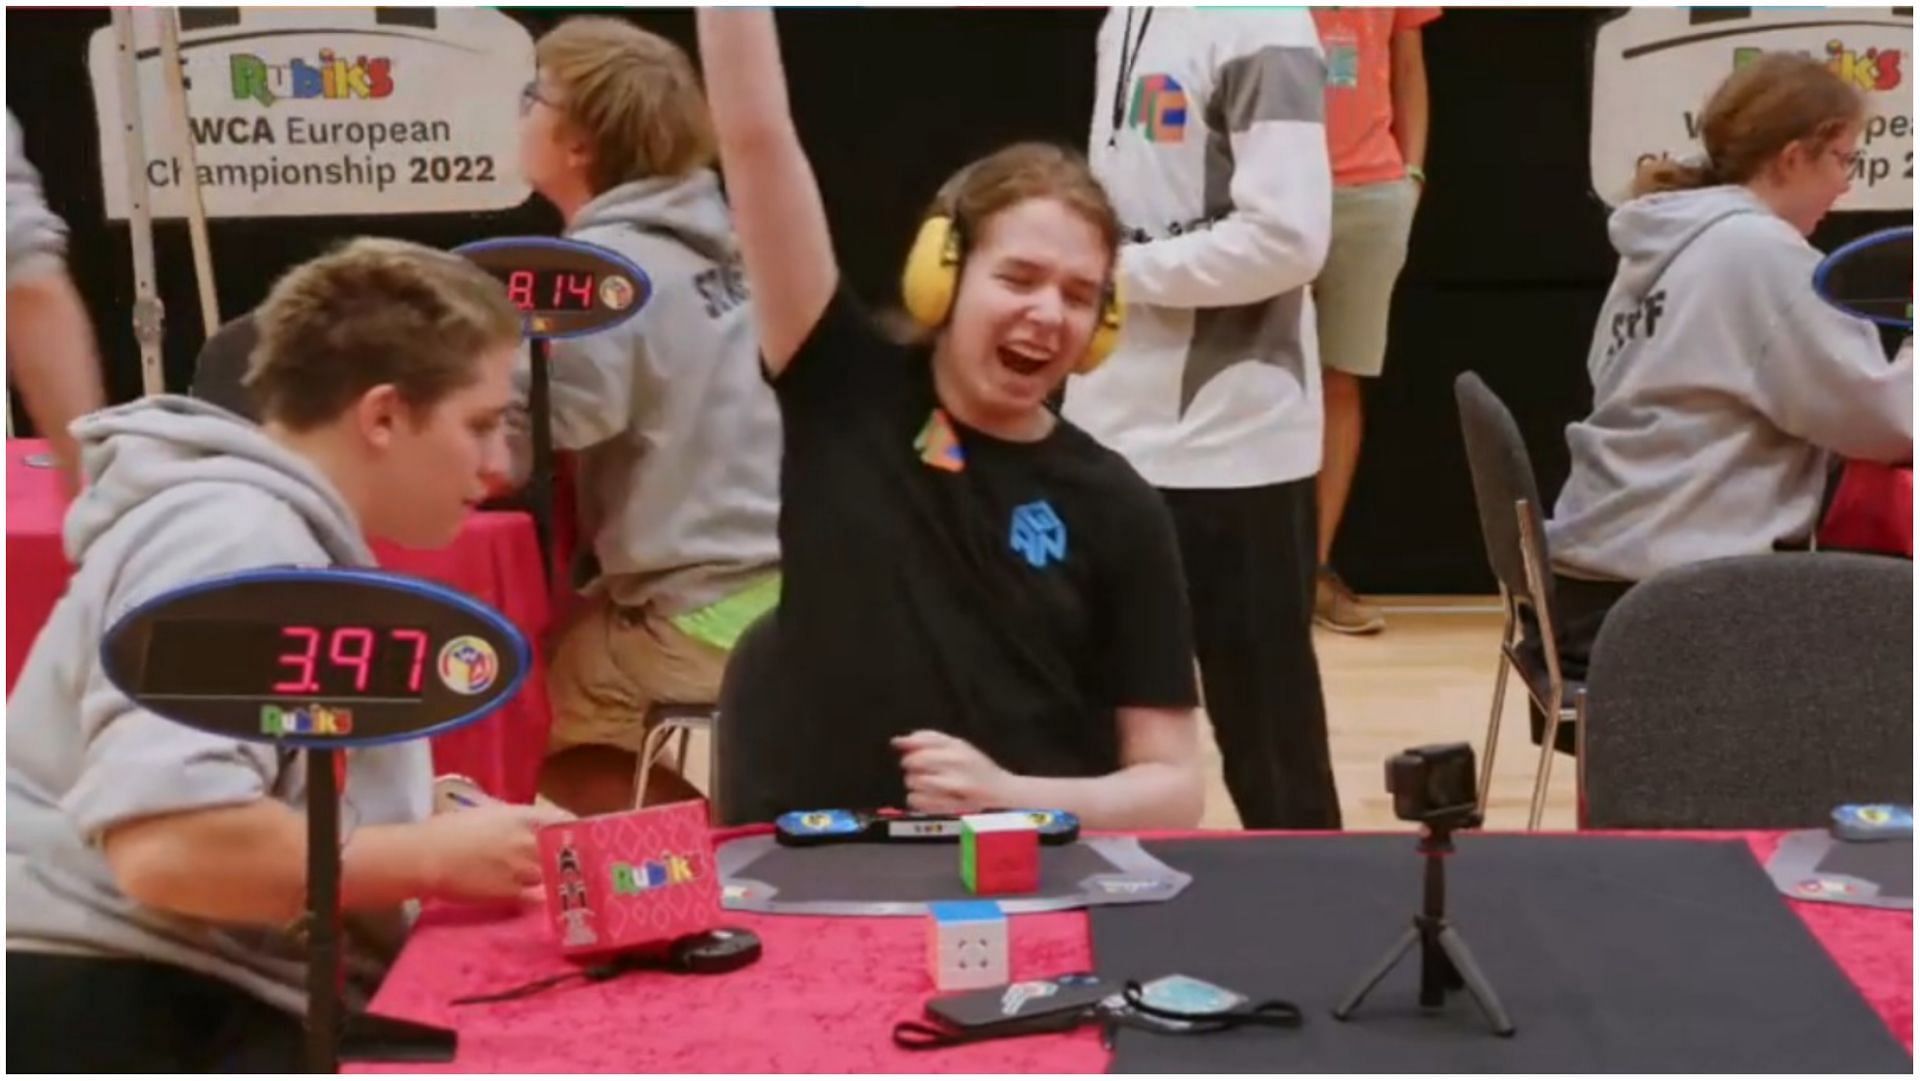 Teenager solves Rubik’s Dice in 3.97 seconds, breaks file on digicam